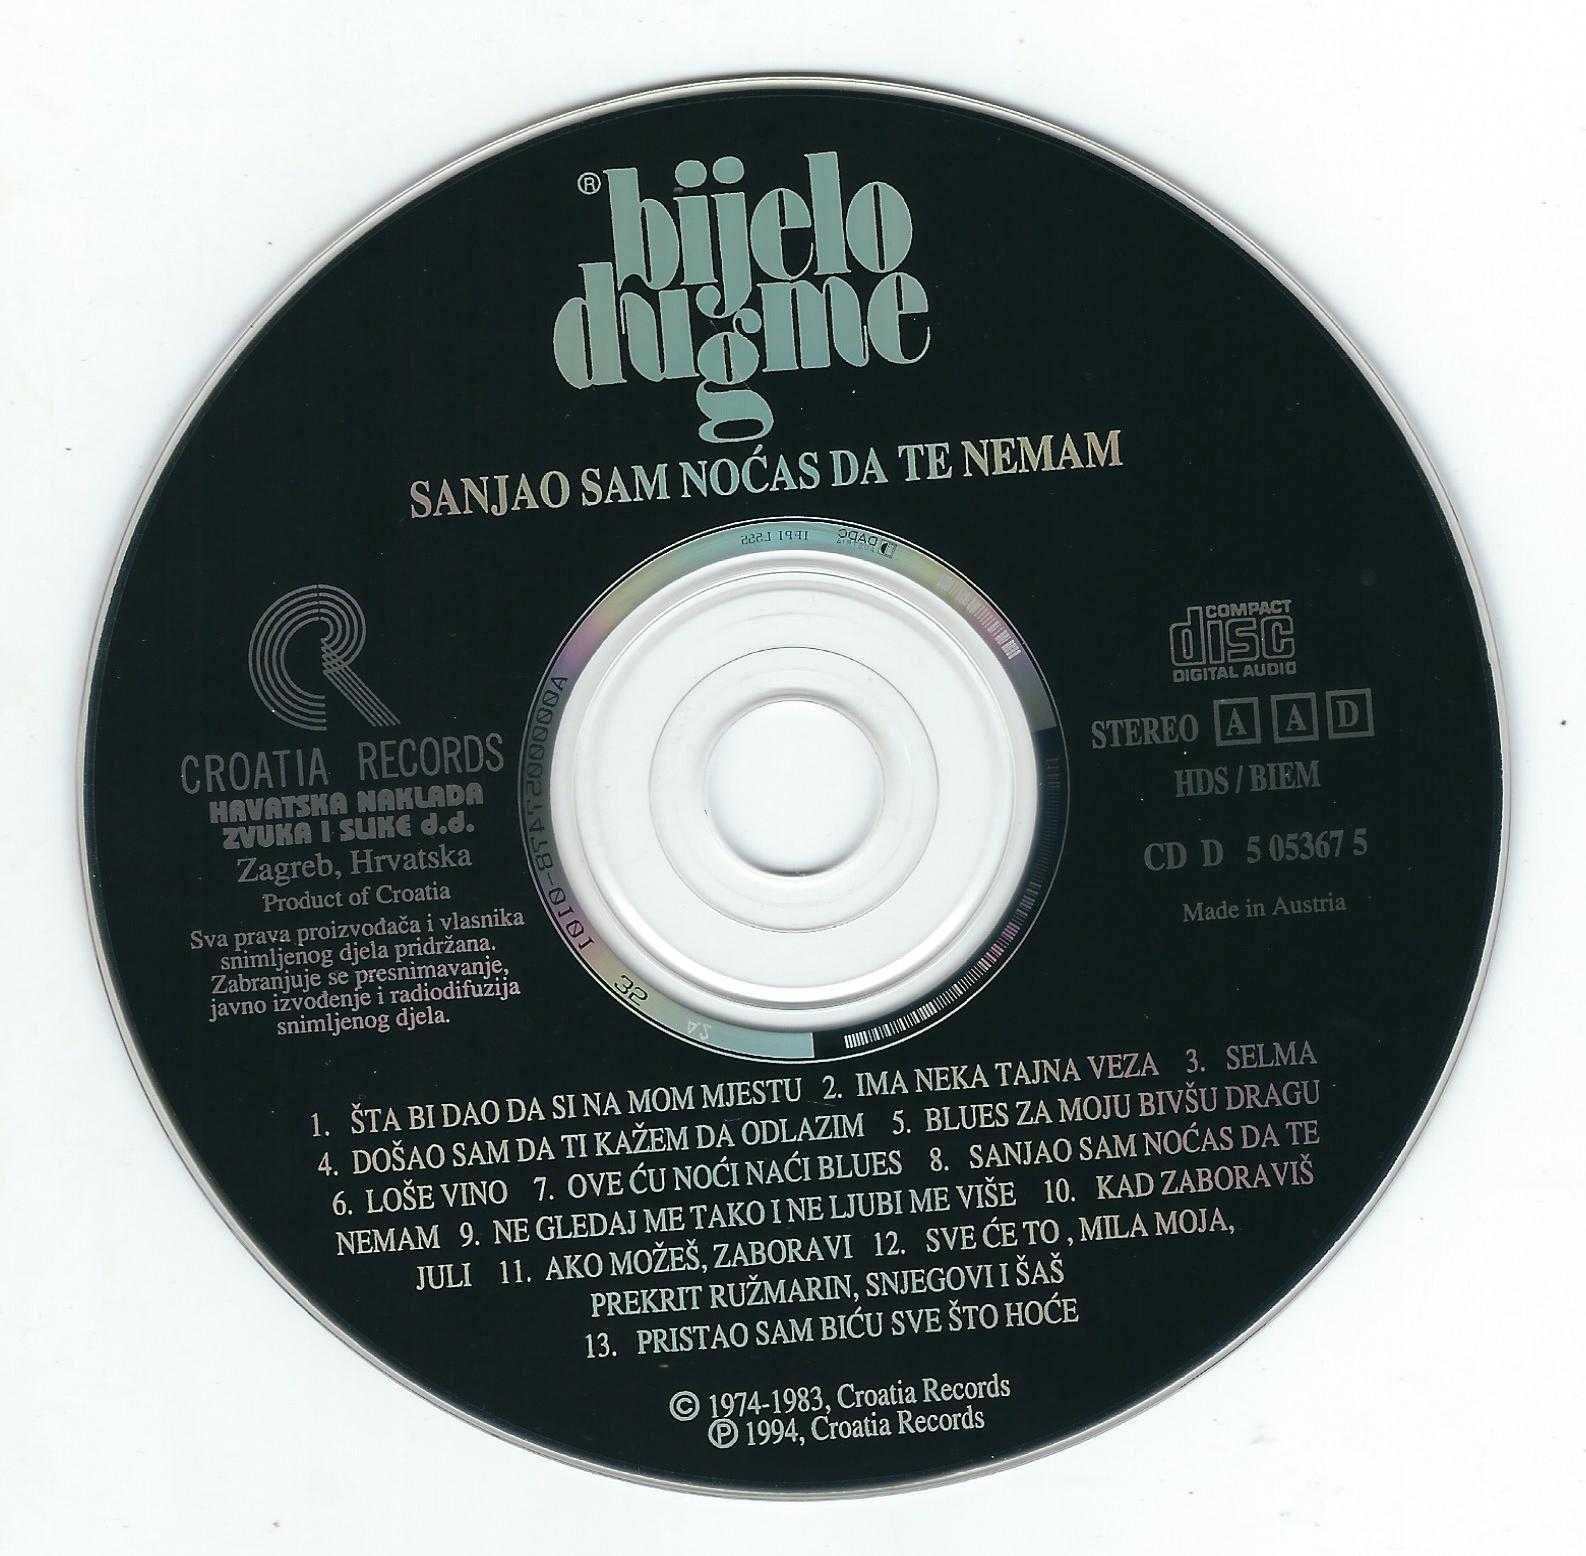 CD Bijelo Dugme - Sanjao Sam Noćas Da Te Nemam (1994) (Croatia Records